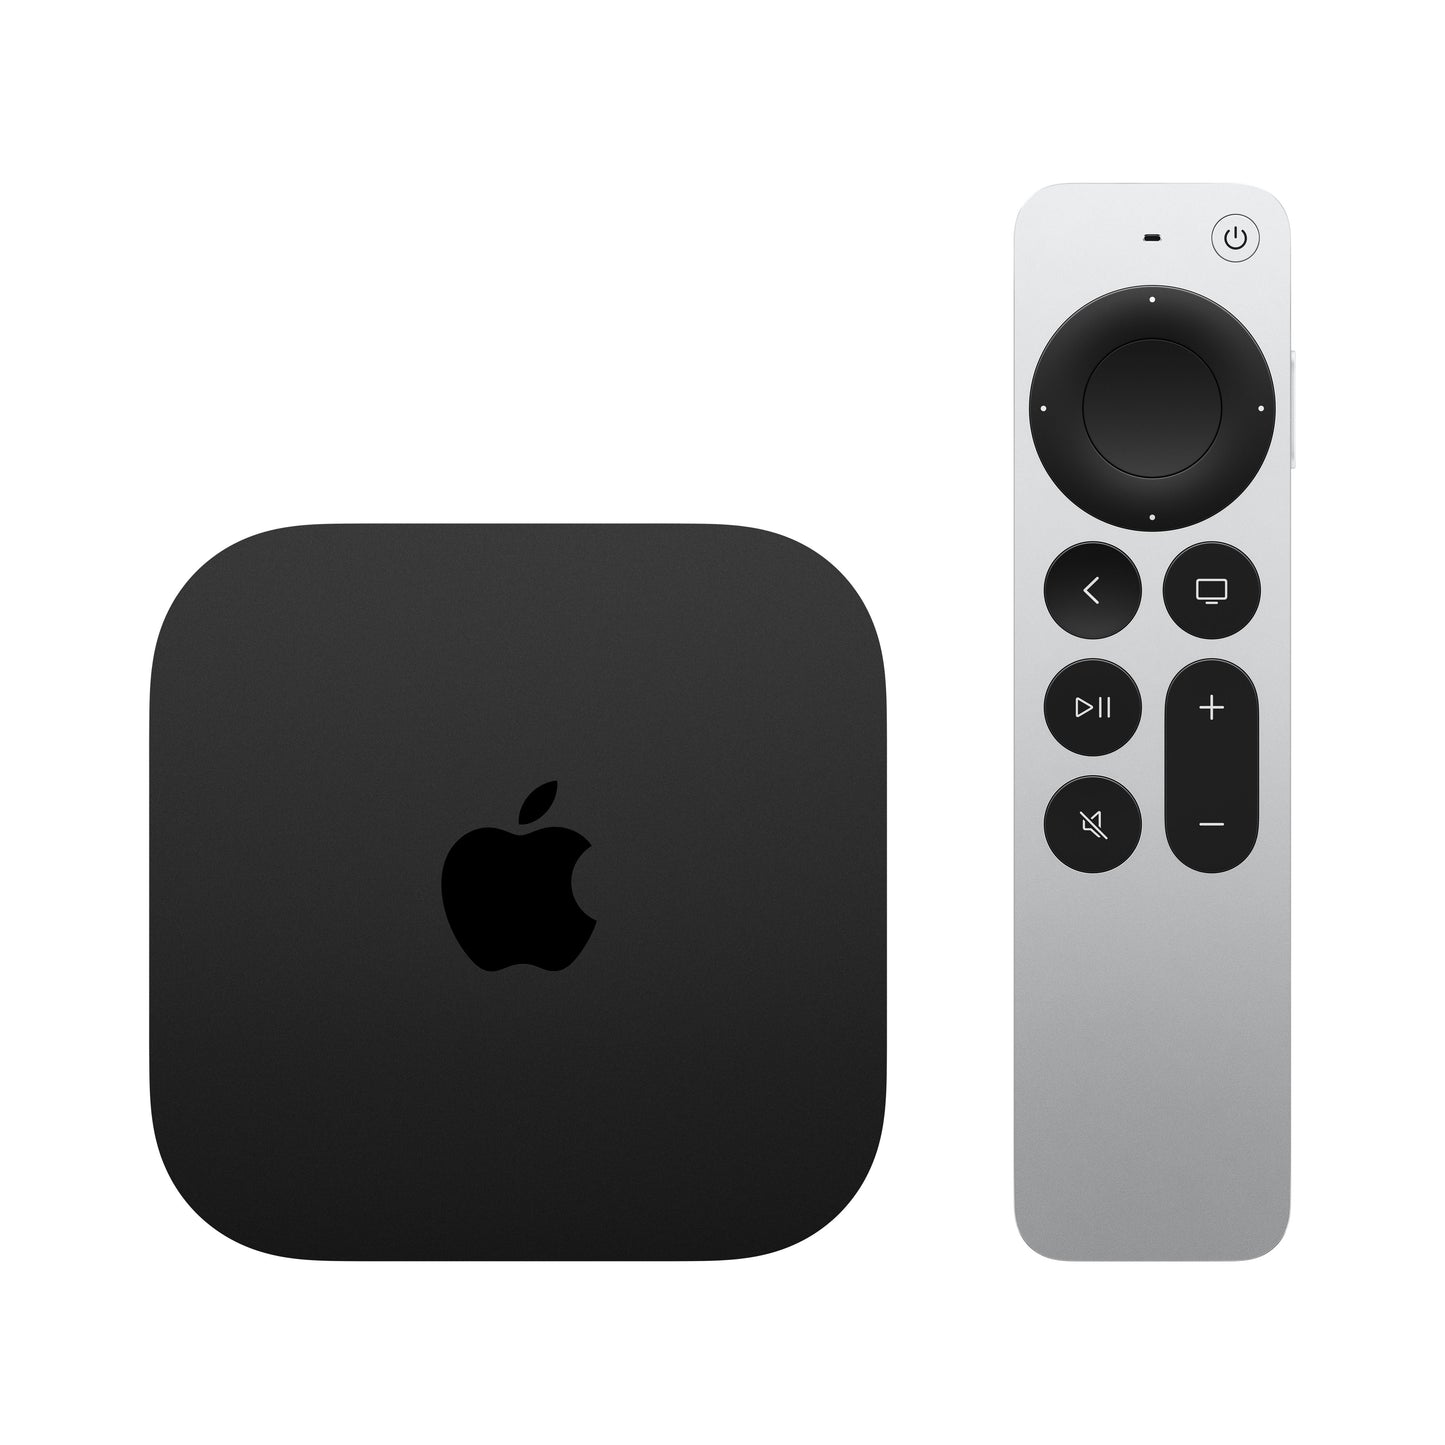 Apple TV 4K Wi‑Fi + Ethernet avec 128 Go de stockage